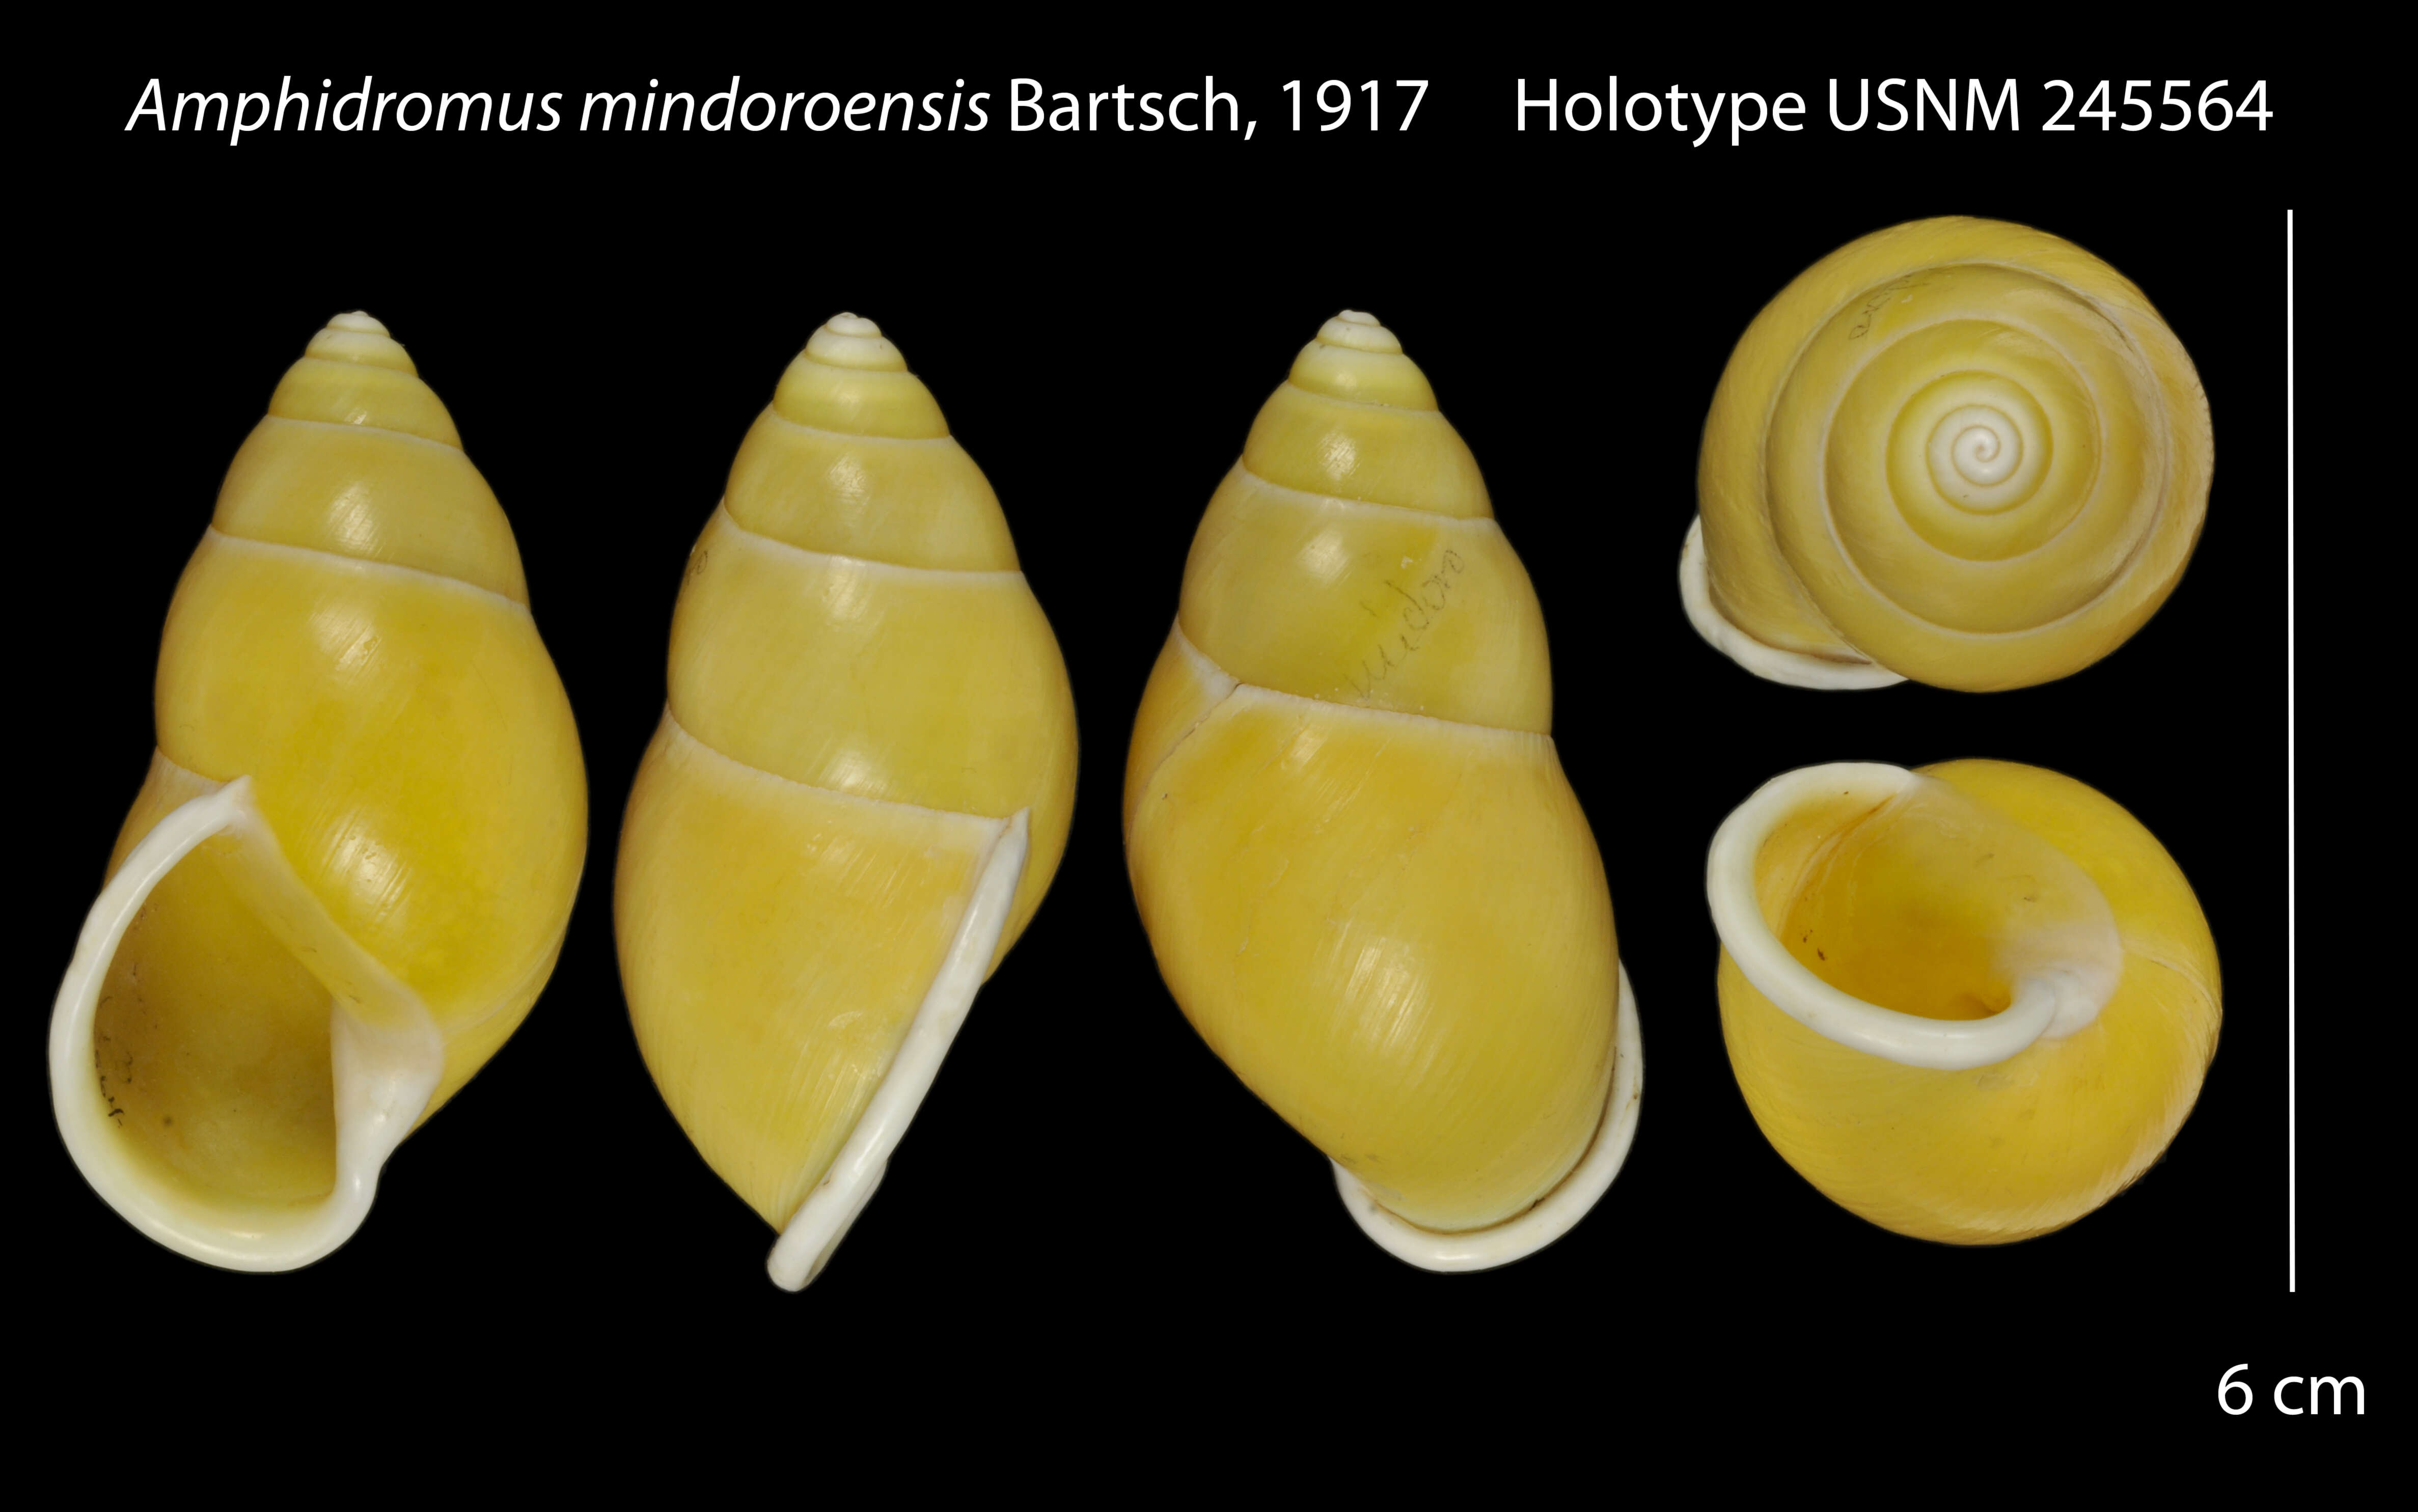 Image of Amphidromus mindoroensis Bartsch 1917